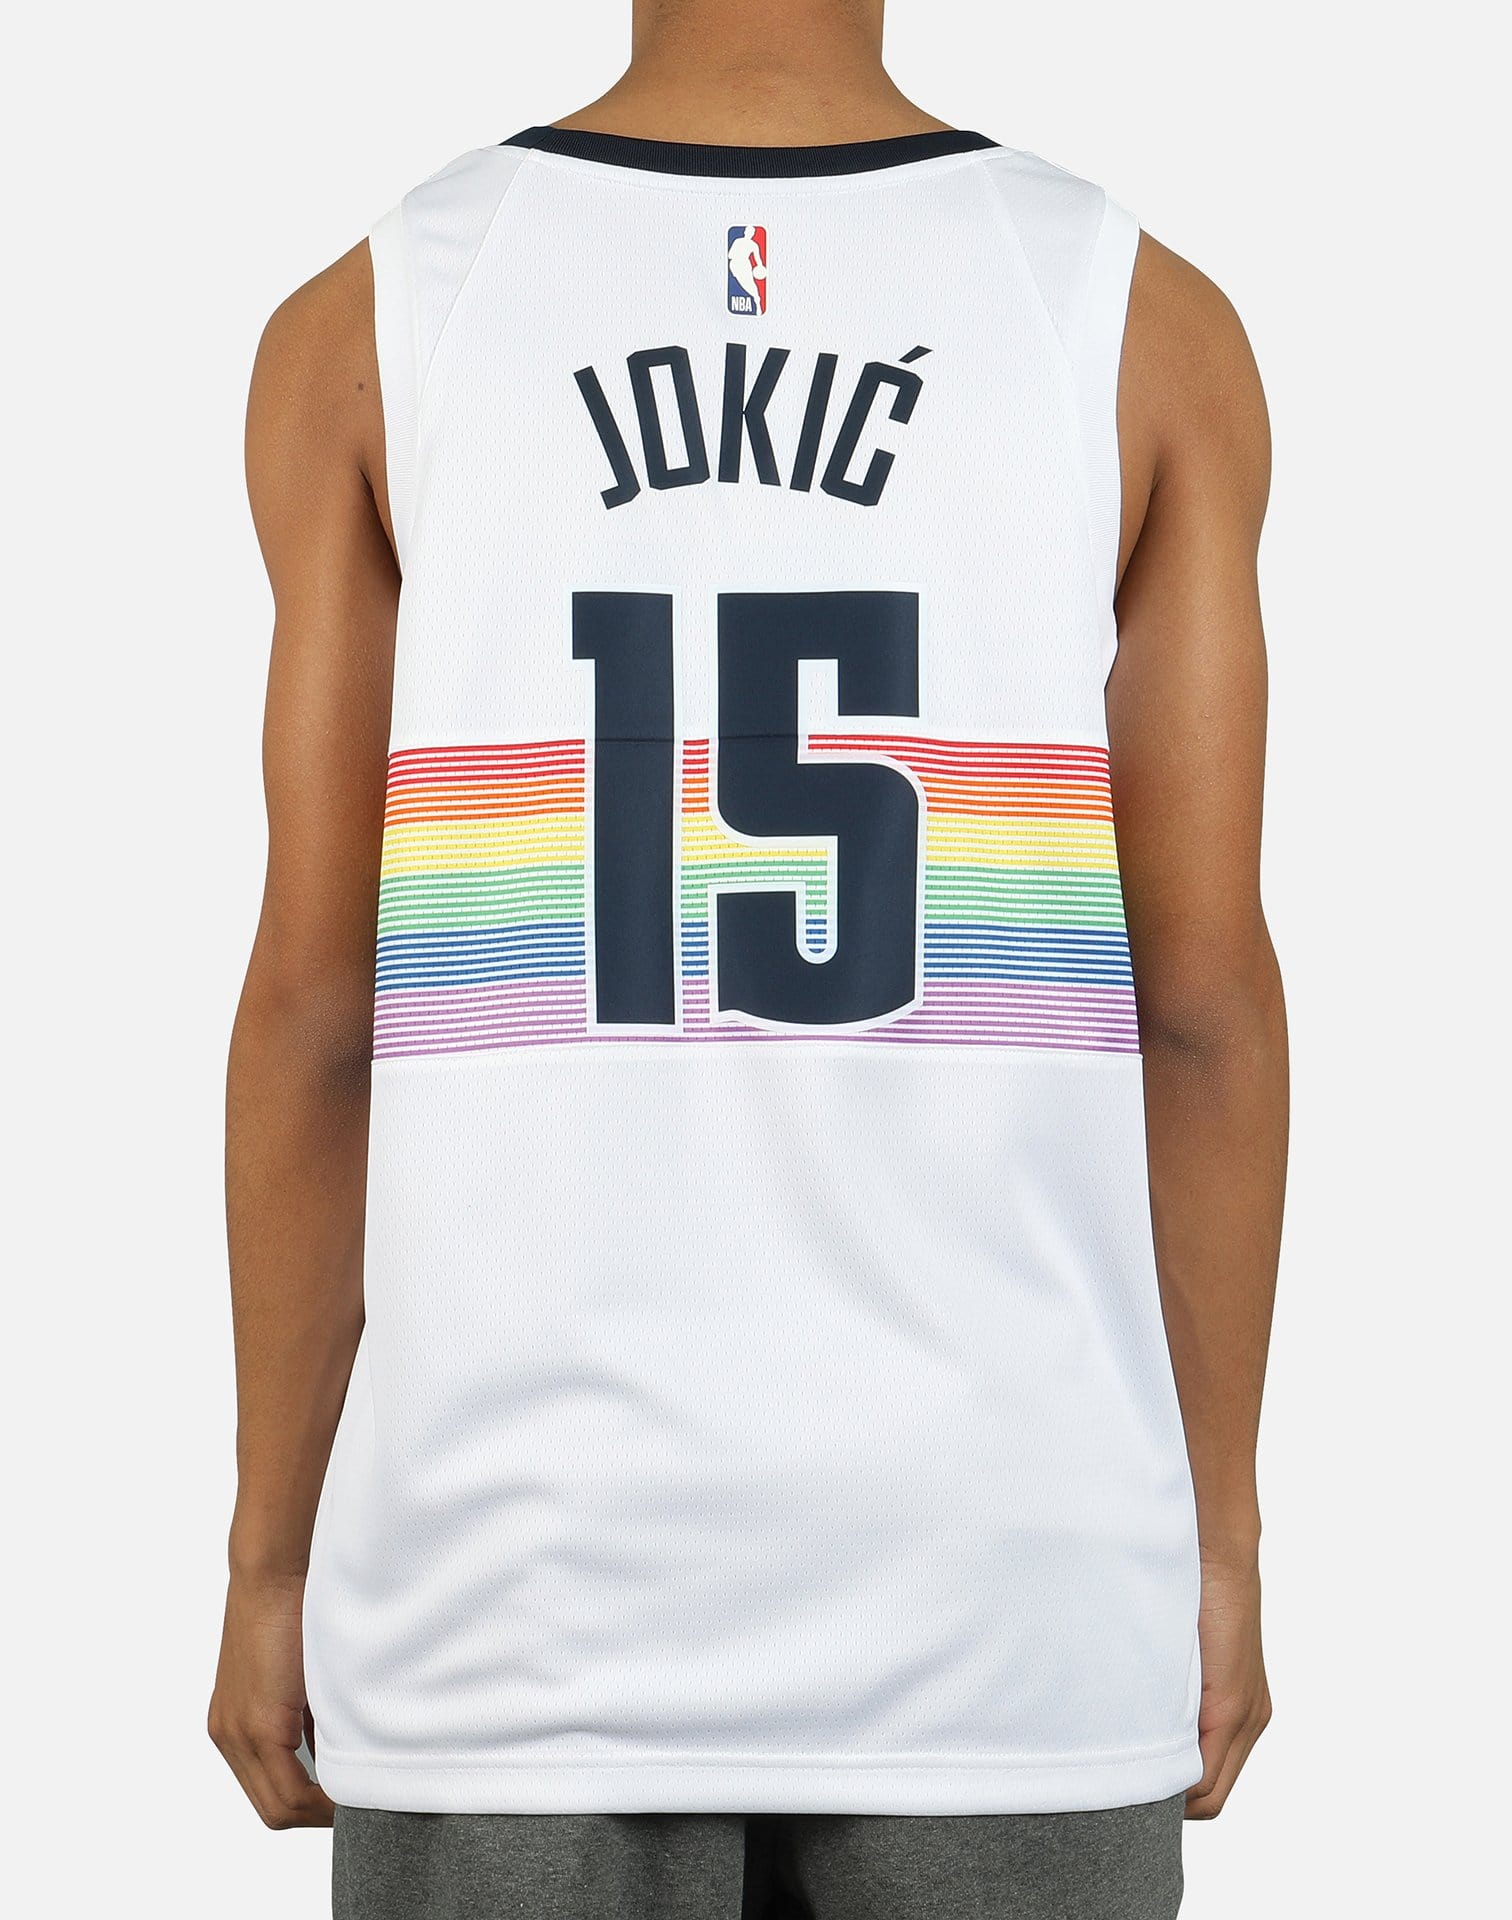 Nike Nikola Jokic Denver Nuggets CITY Rainbow Jersey Swingman Trikot NBA M